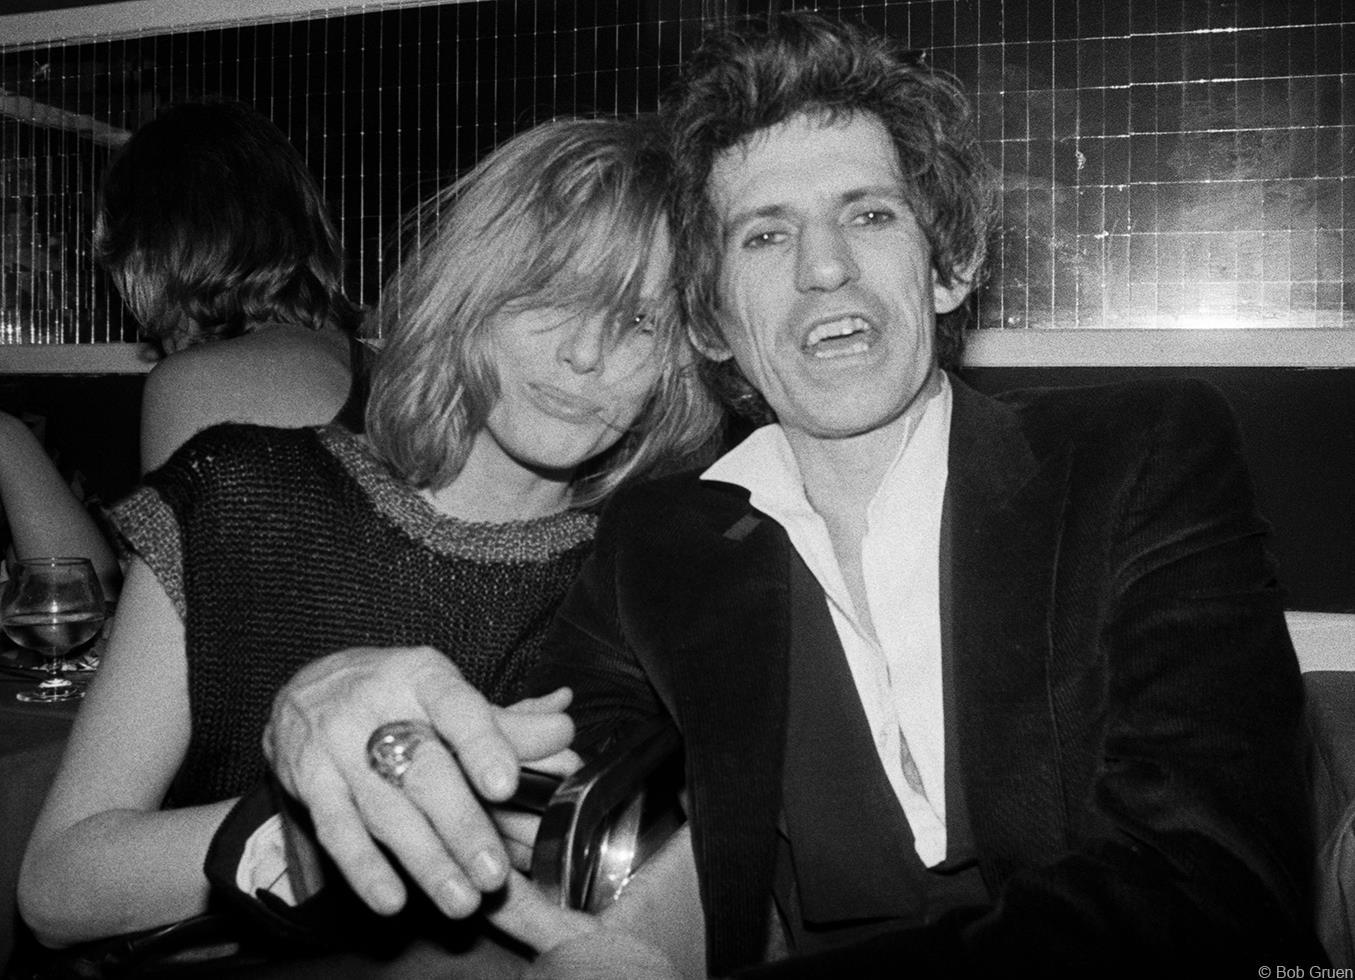 Bob Gruen Portrait Photograph - Rolling Stones, Keith Richards & Patti Hansen, NYC, 1983